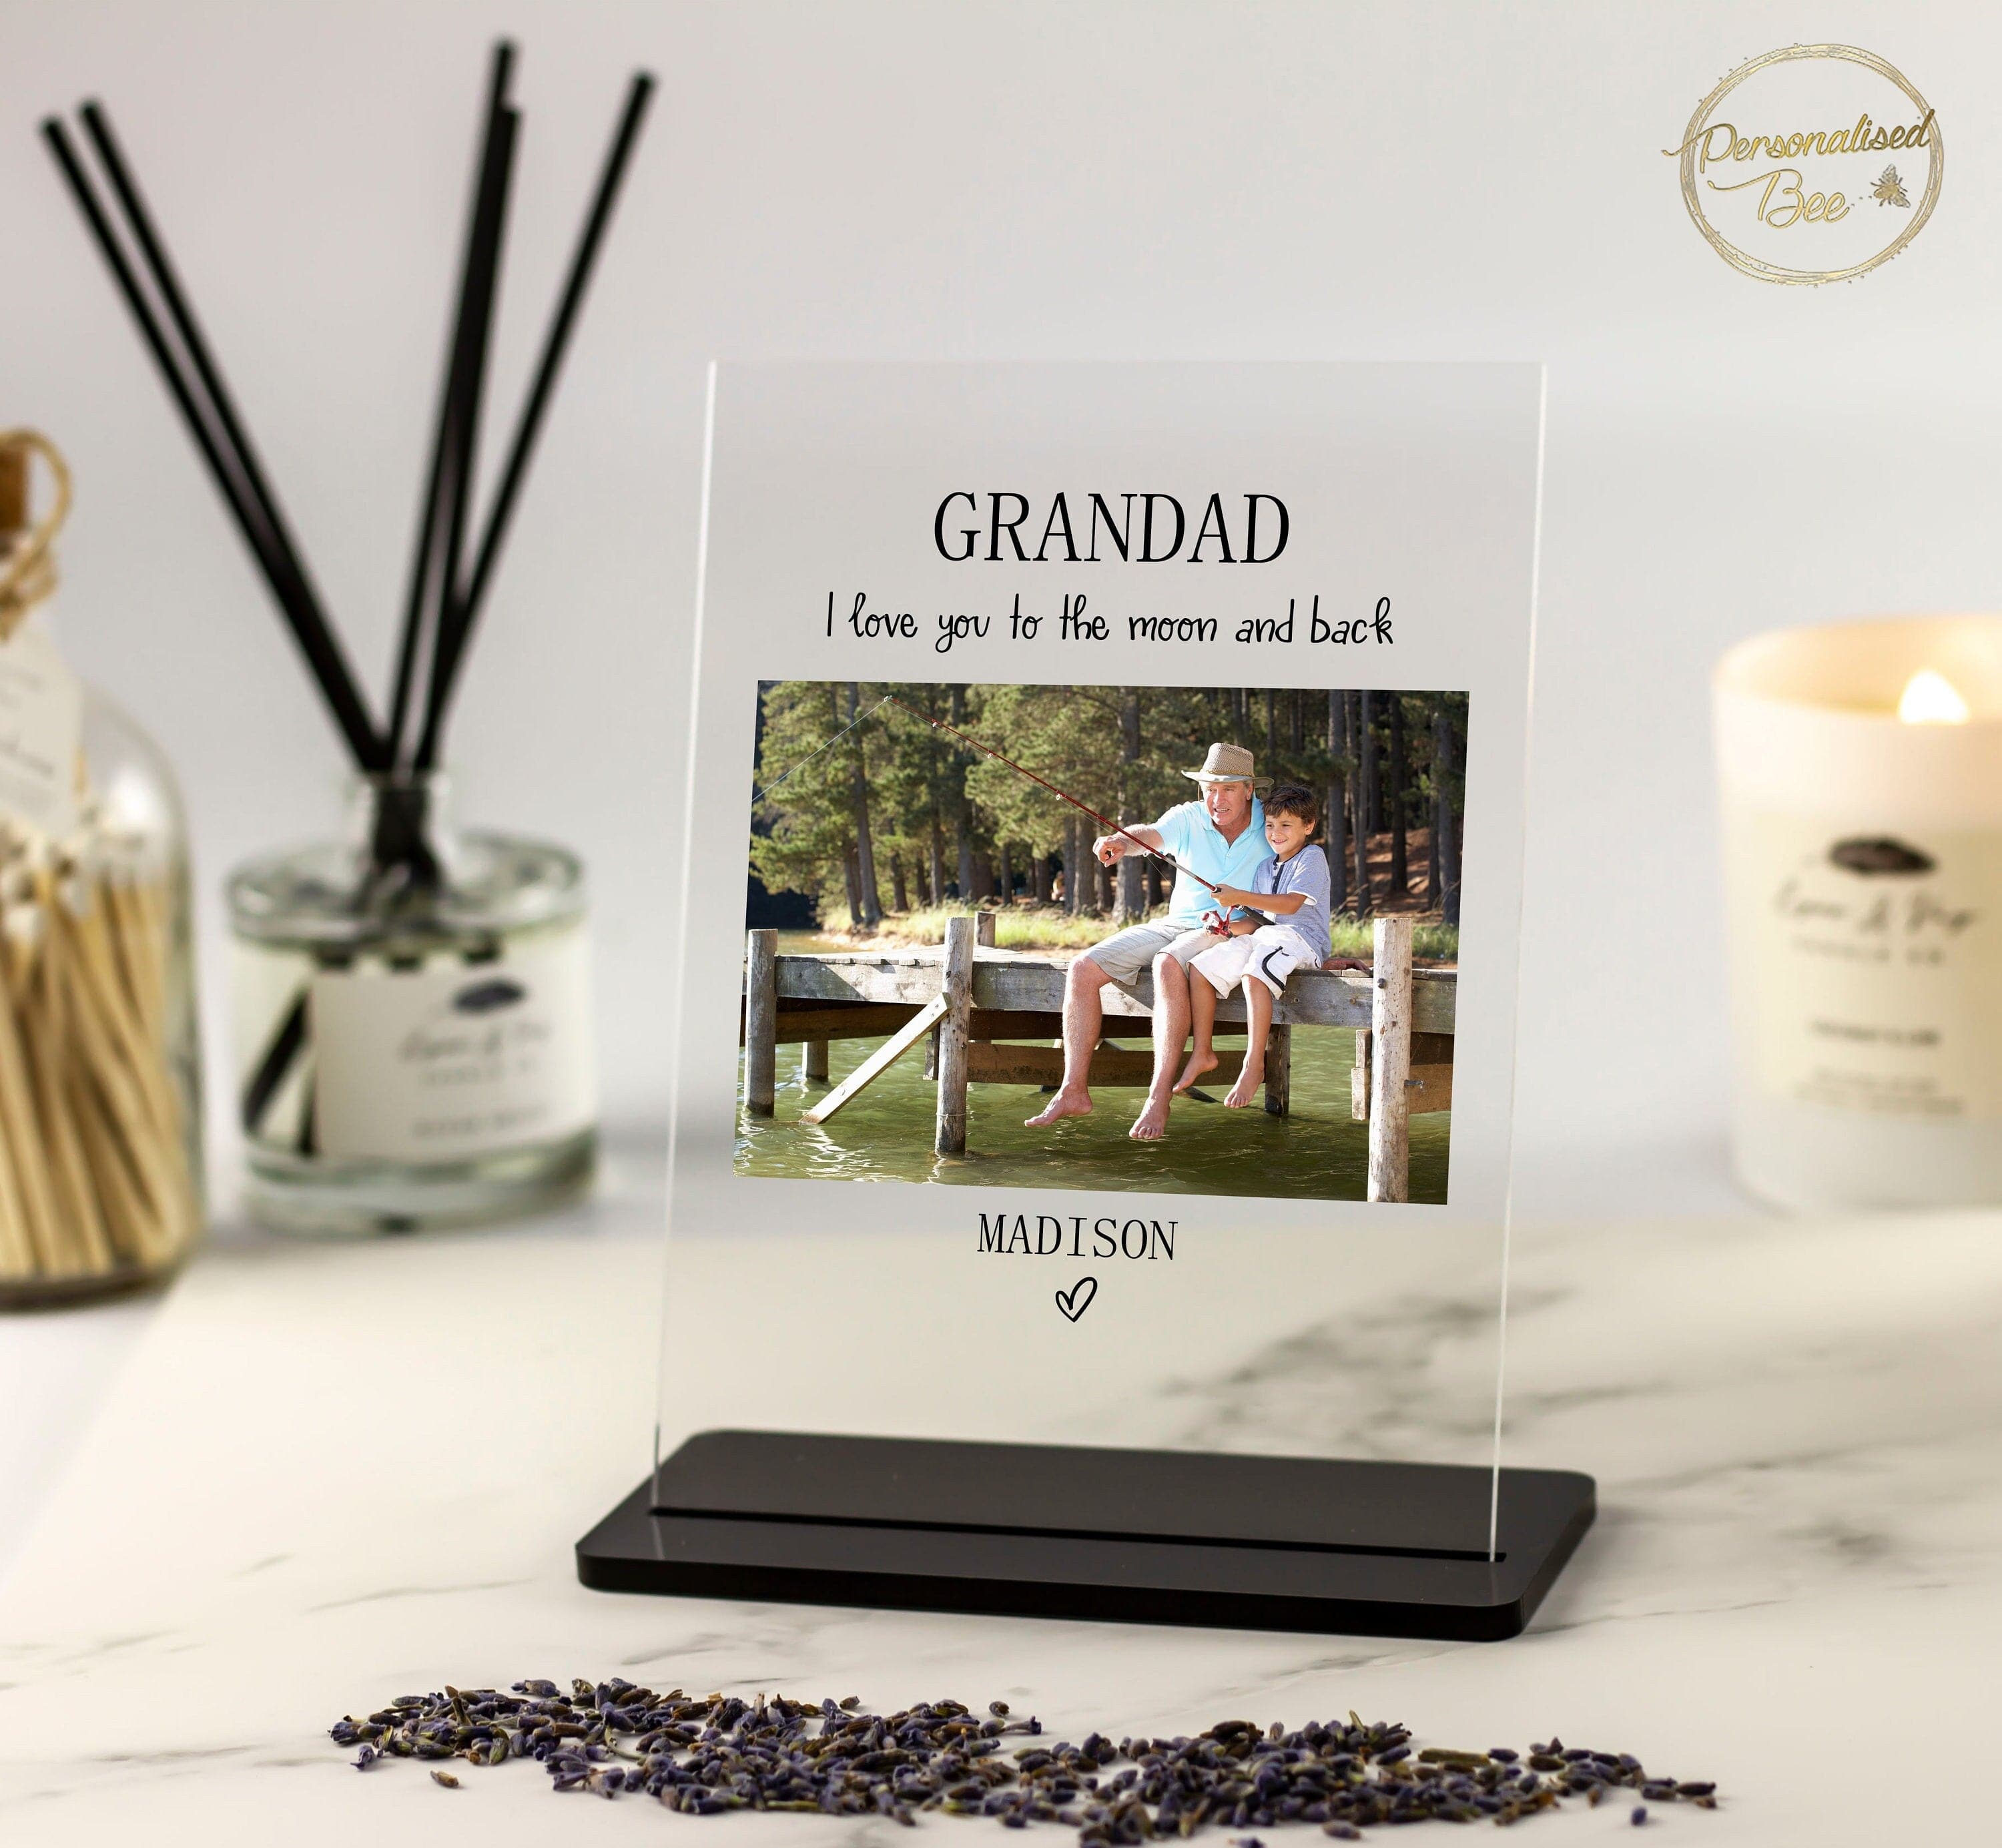 Grandad Gift, Photo Gift for Grandad, Birthday Gift For Grandad, Christmas Gift for Grandad, Photo Keepsake Gift, Acrylic Photo Plaque